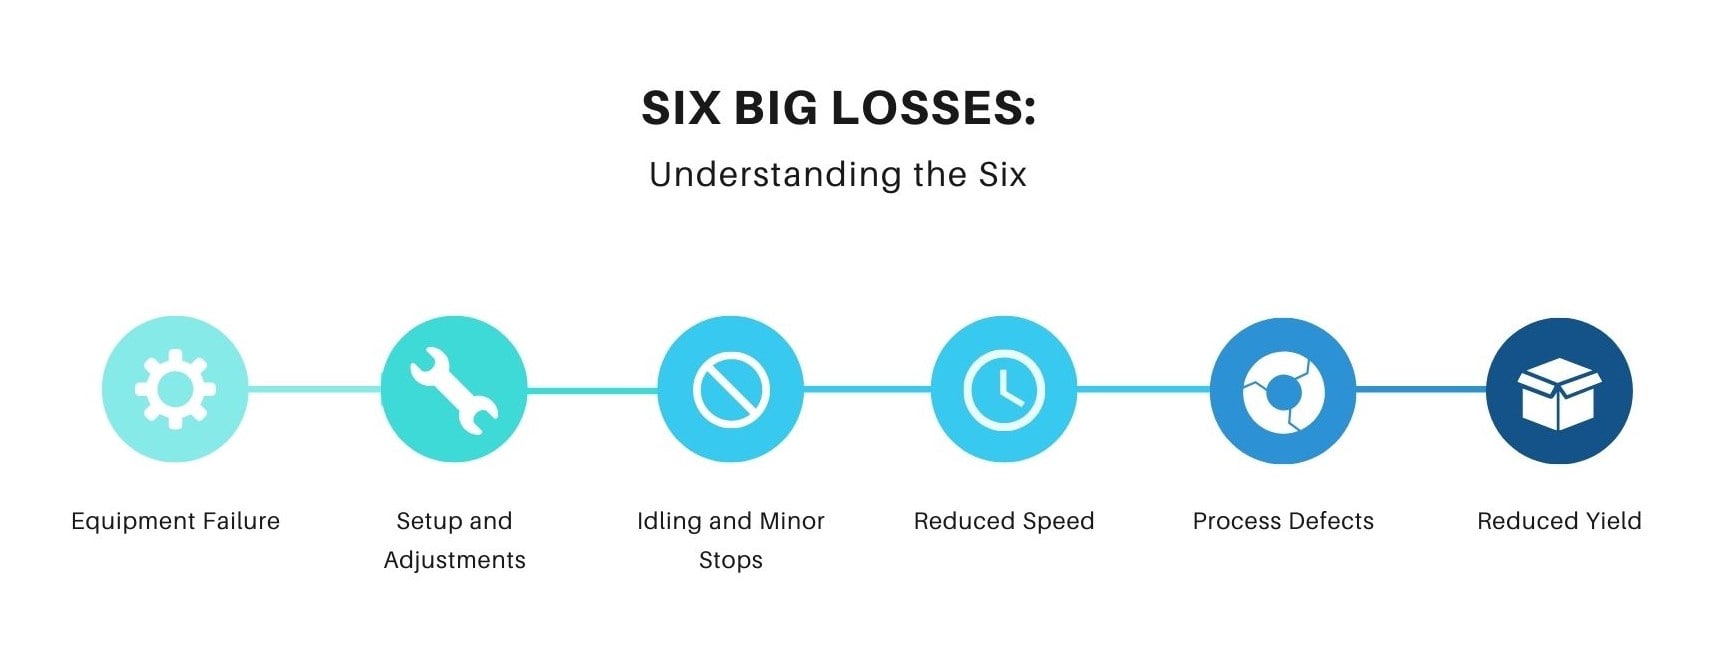 Six Big Losses: Understanding the Six